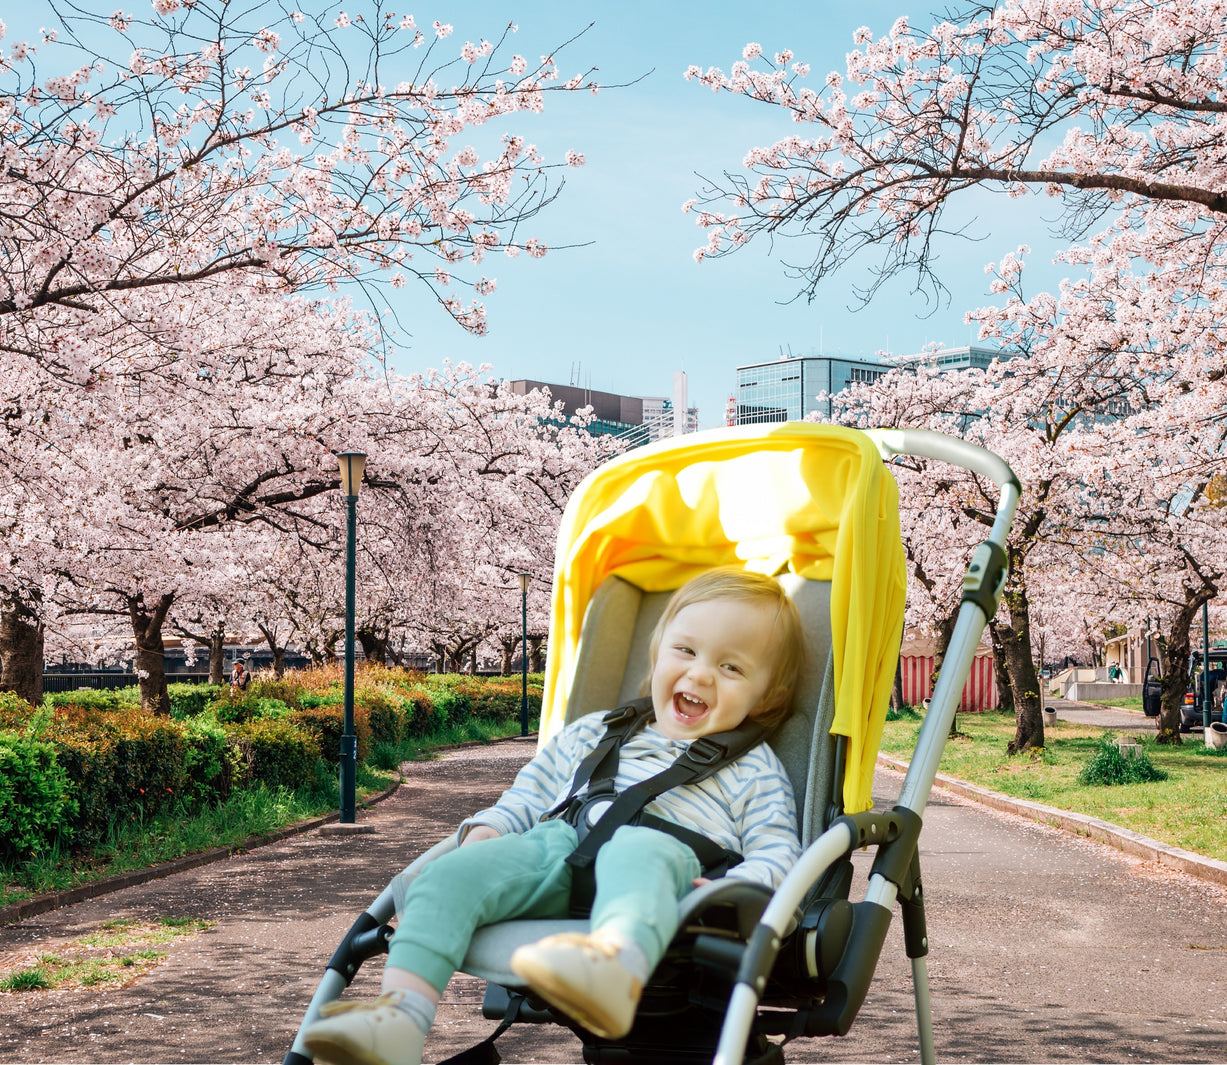 Should you bring a stroller to Japan?